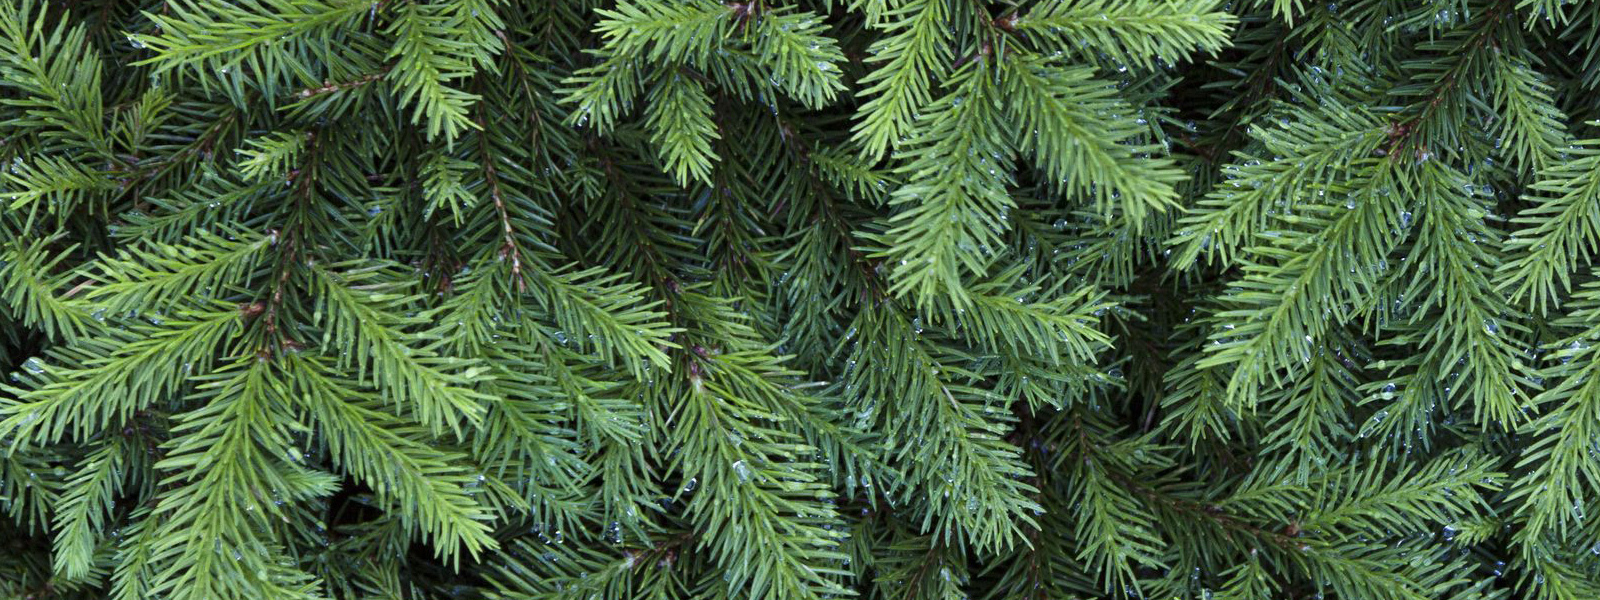 Close up image of evergreen tree